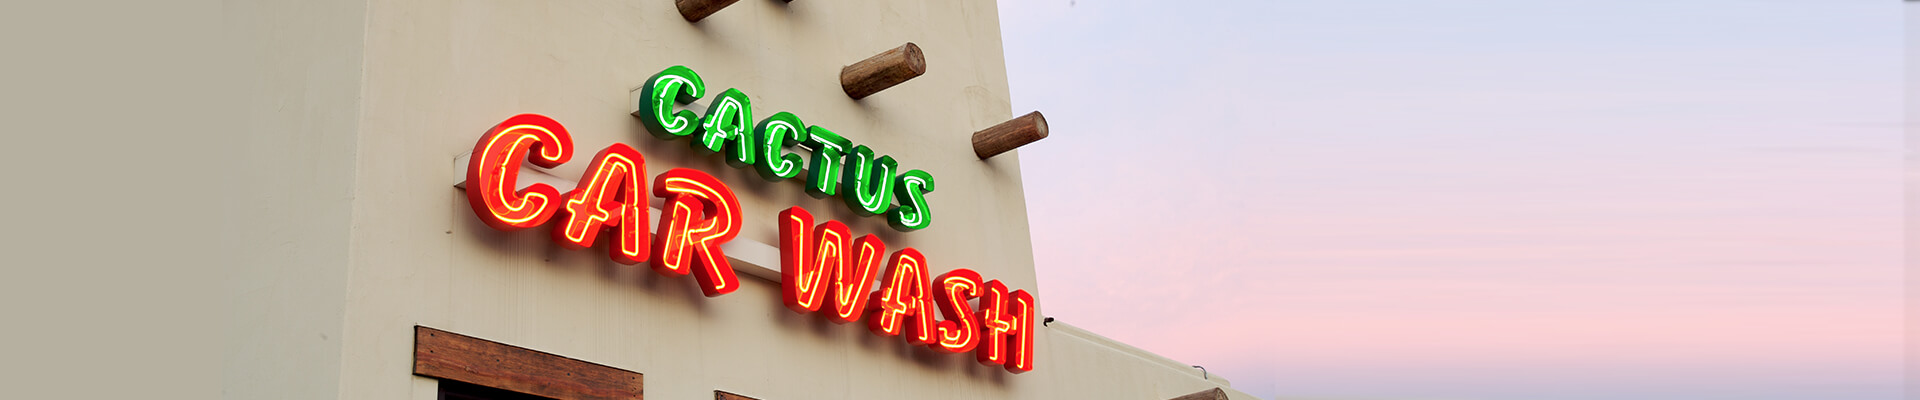 Cactus Milton Location Wins Best Car Wash 2018!